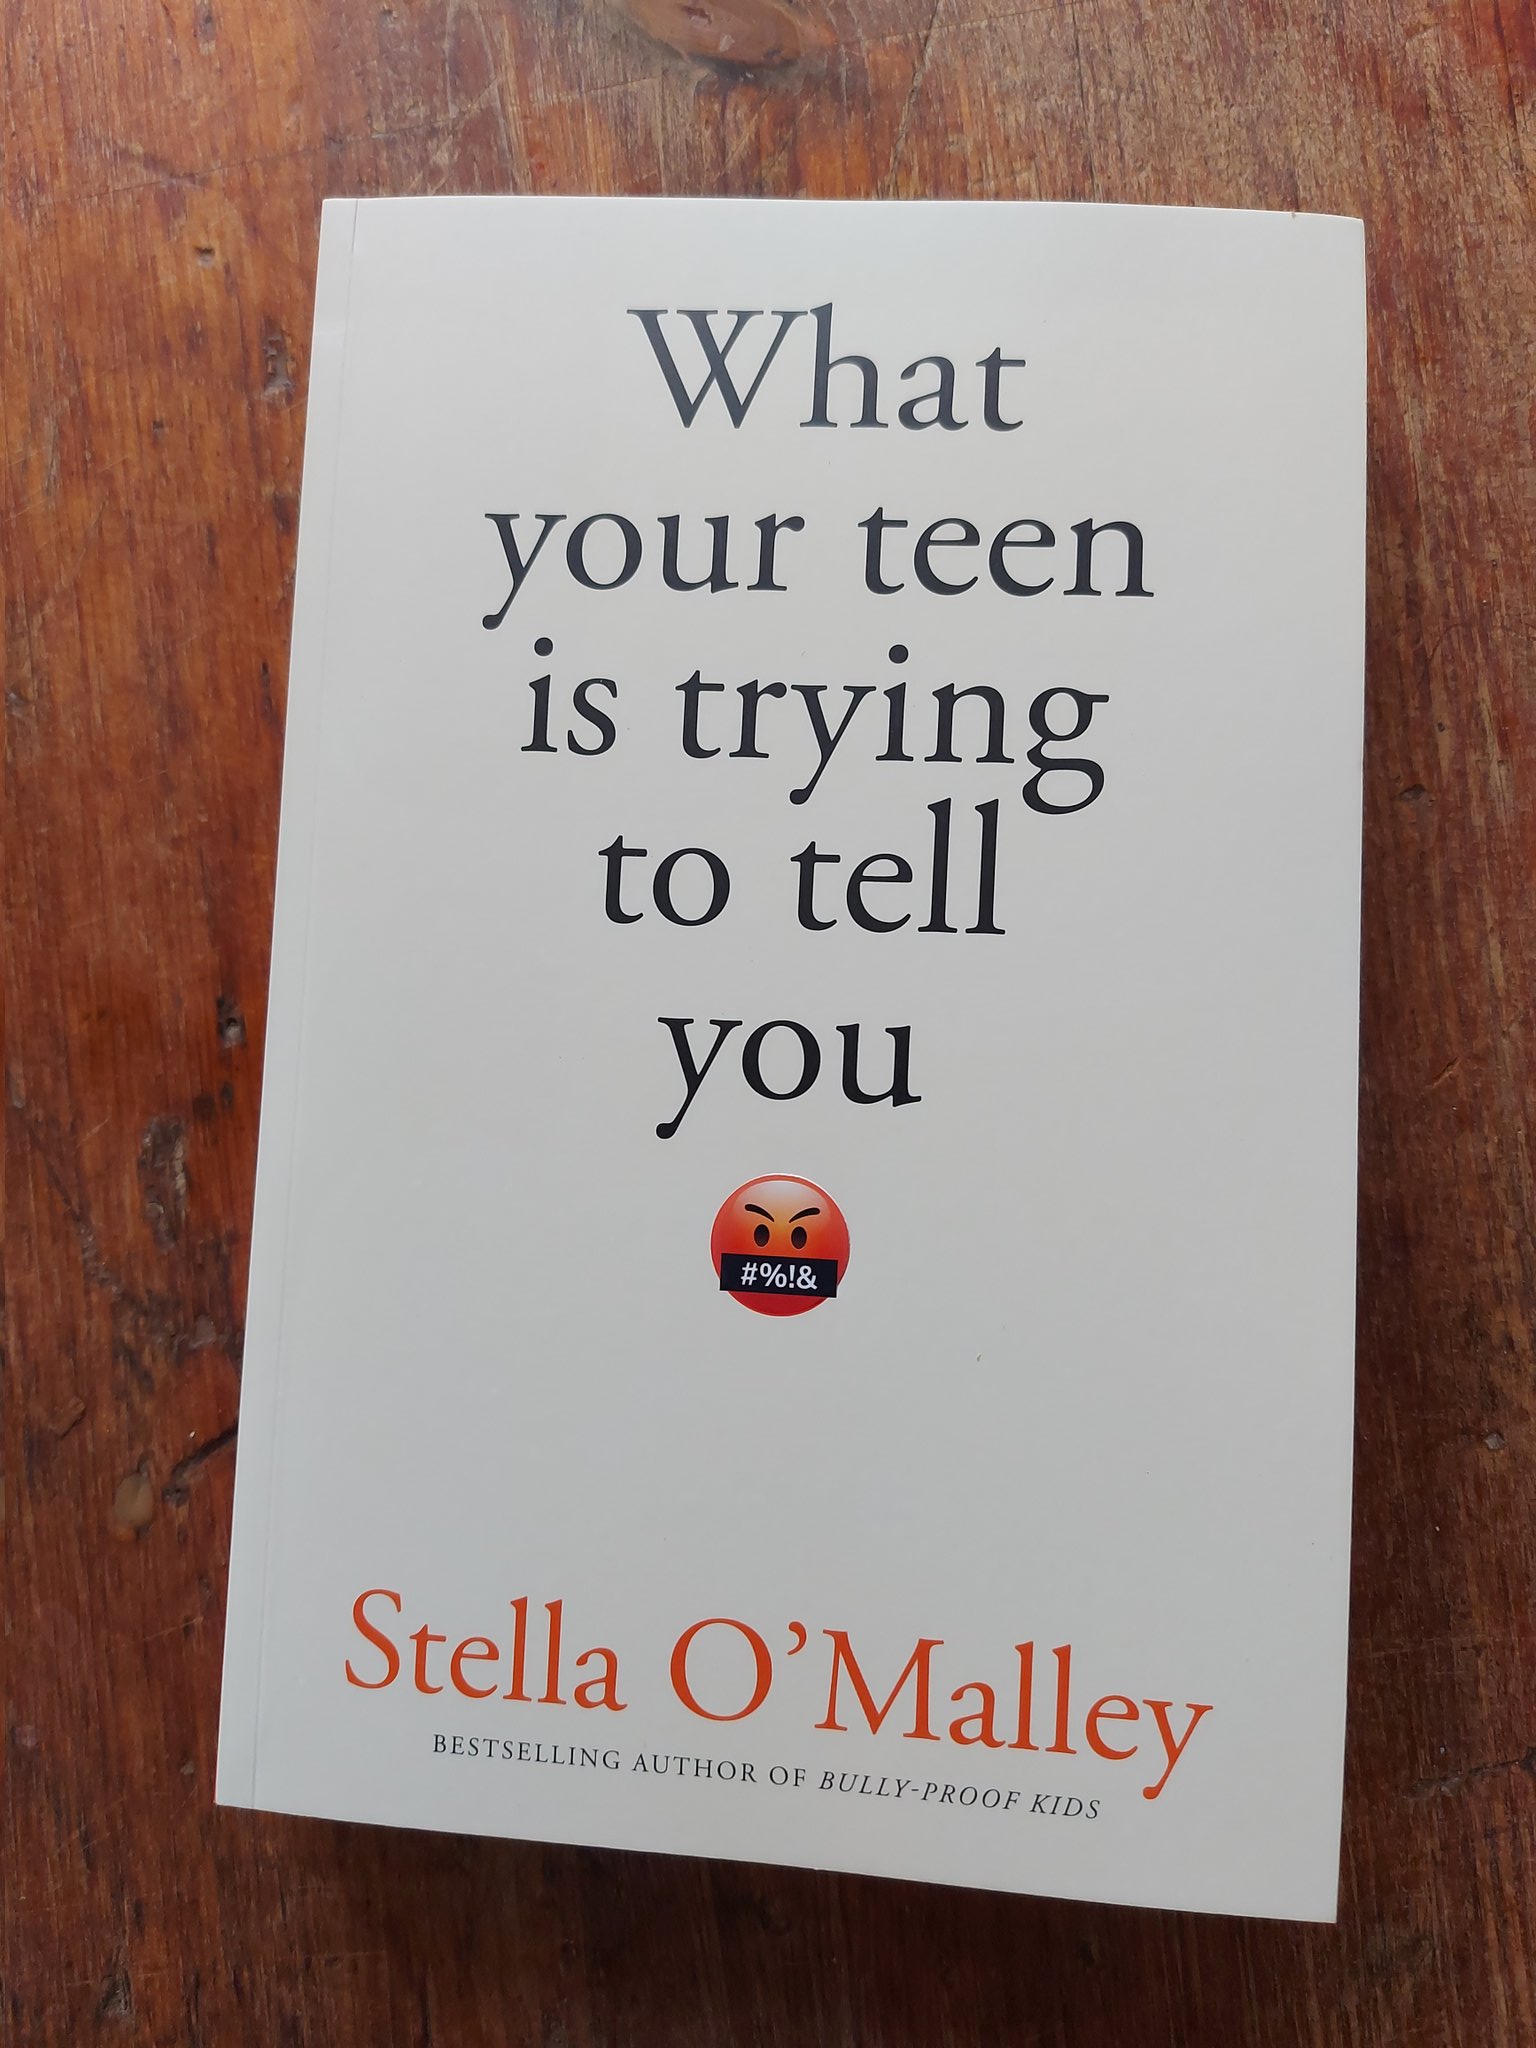 Stella O'Malley Book (Image: Stella O'Malley Twitter)